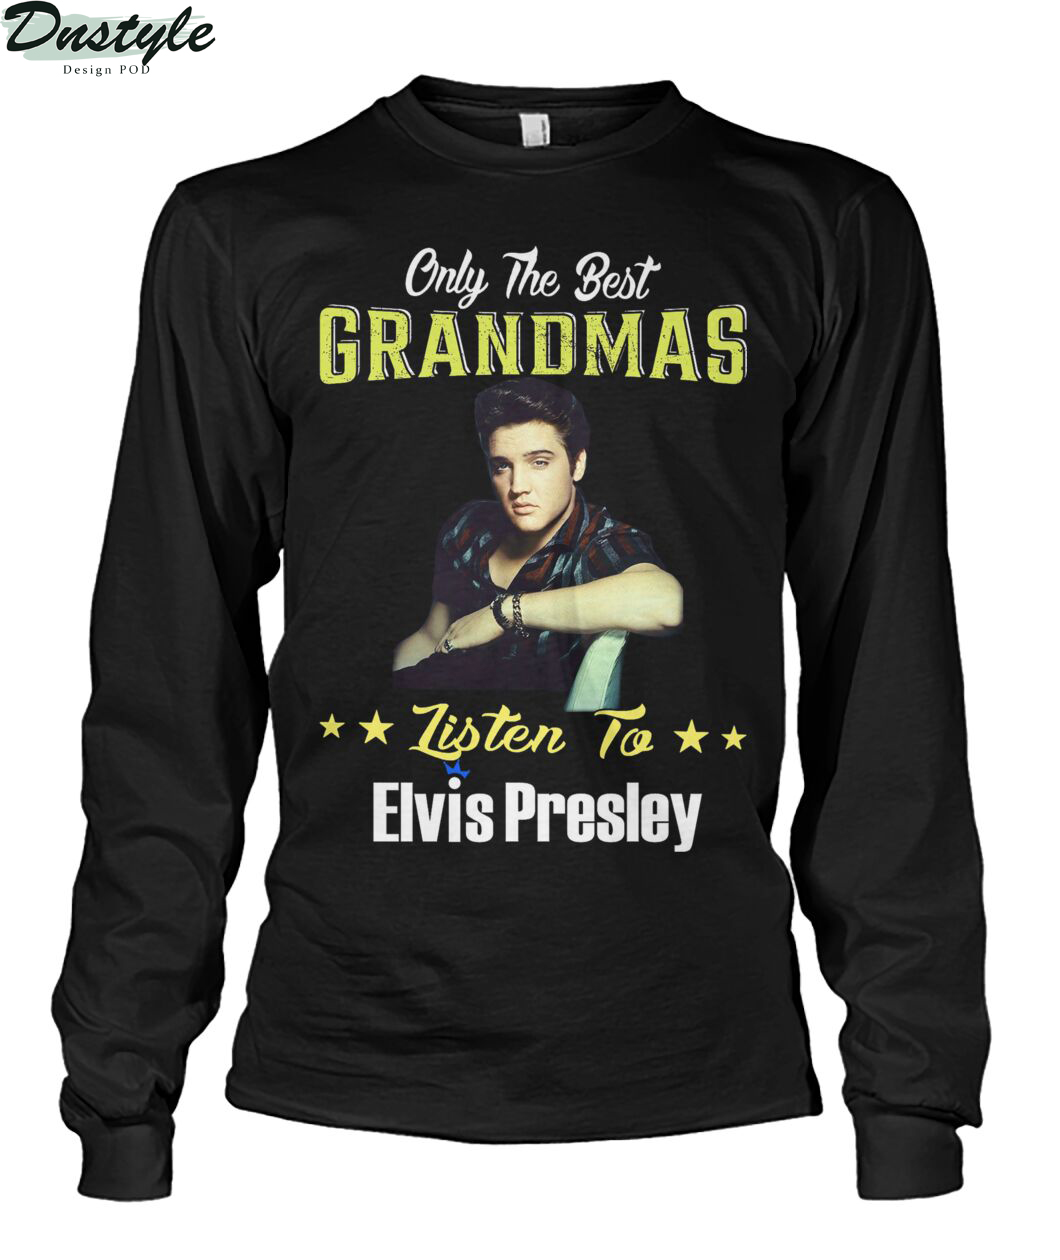 Only the best grandmas listen to elvis presley shirt